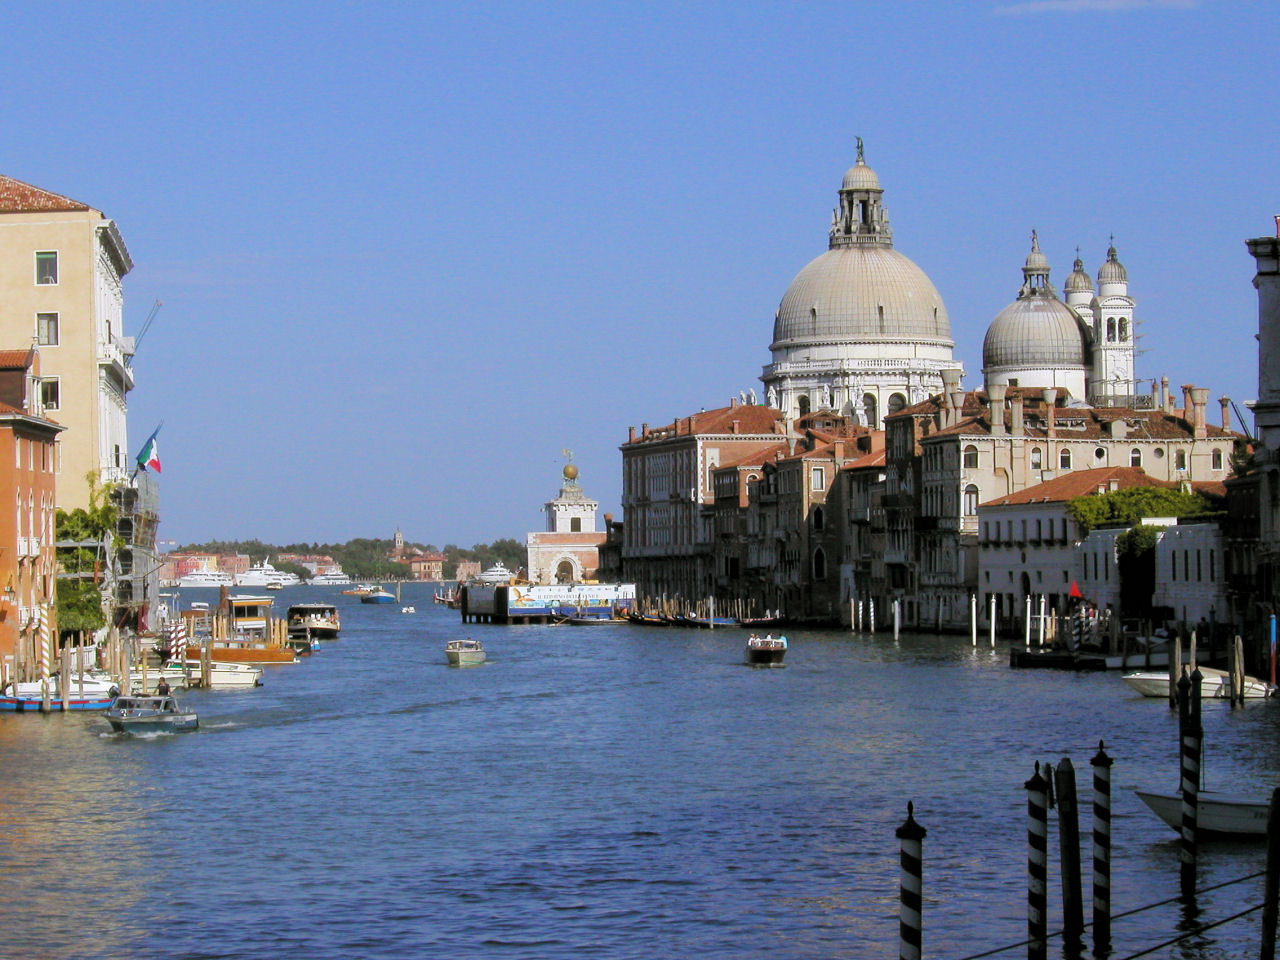 http://www.letsgo-europe.com/Italy/Venice/venice68.jpg